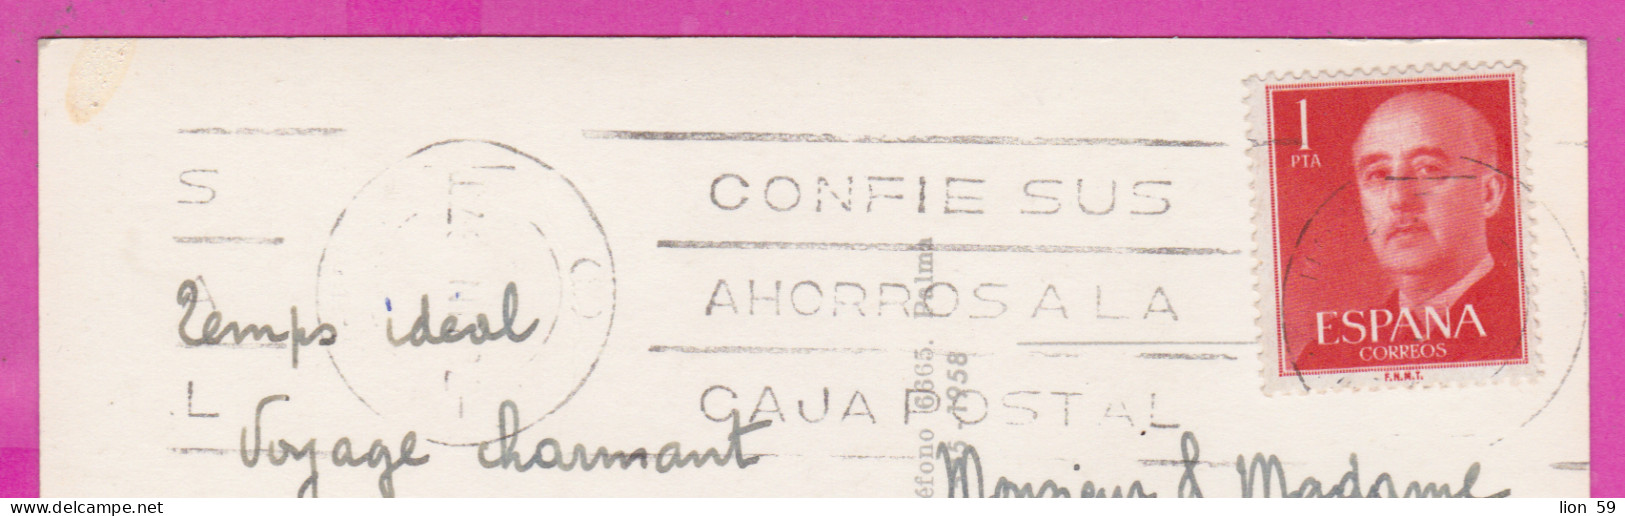 293815 / Spain - Mallorca - Palma Paseo De Sagrera PC 1959 USED 1 Pta General Franco Flamme ".. Ahorros A La Caja Postal - Lettres & Documents